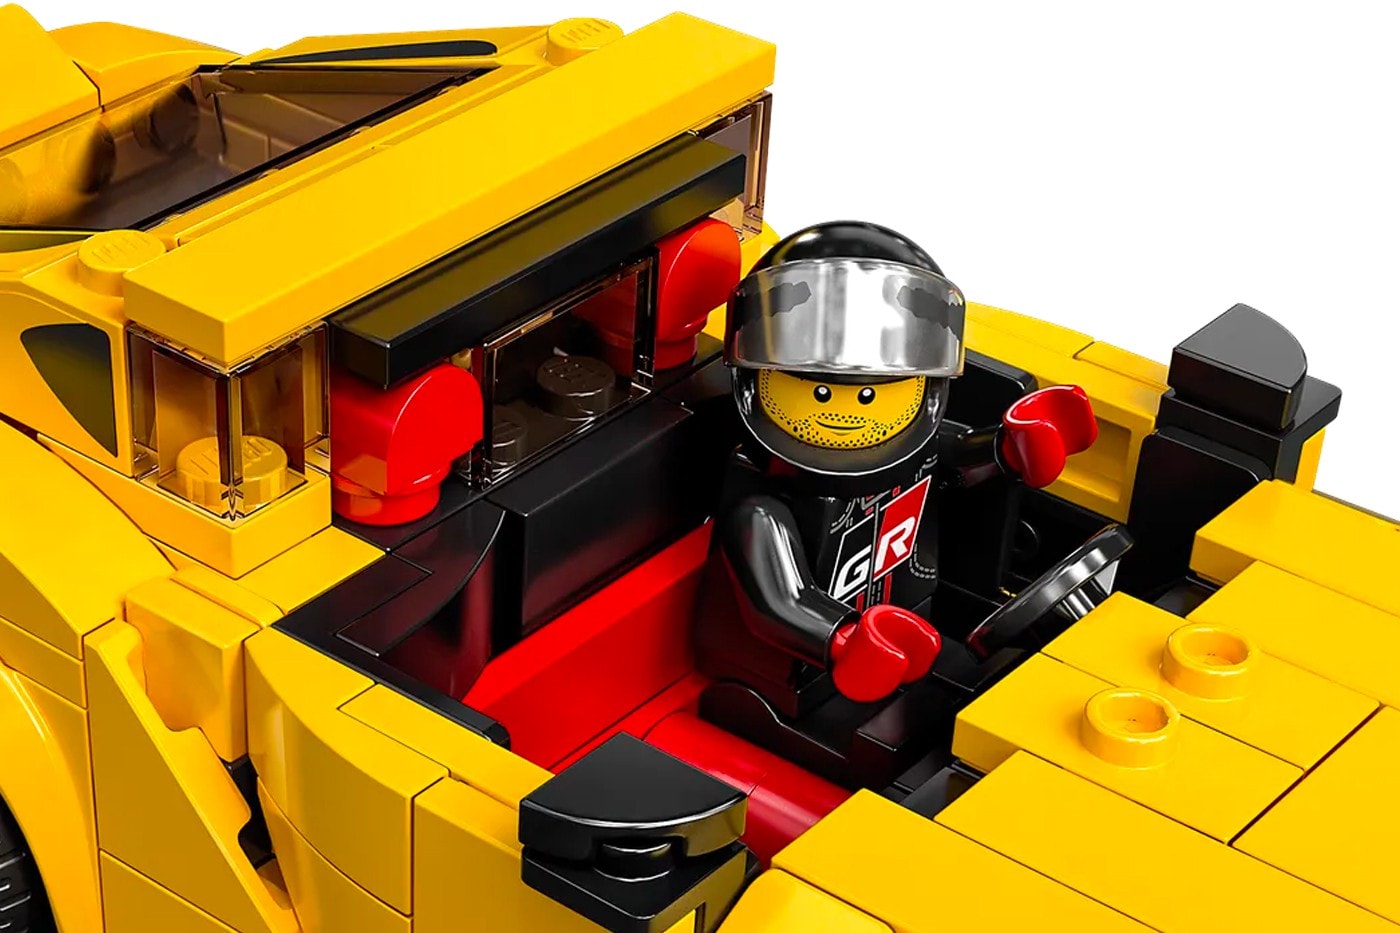 LEGO Speed Champions 全新 Toyota GR Supra 積木模型上架